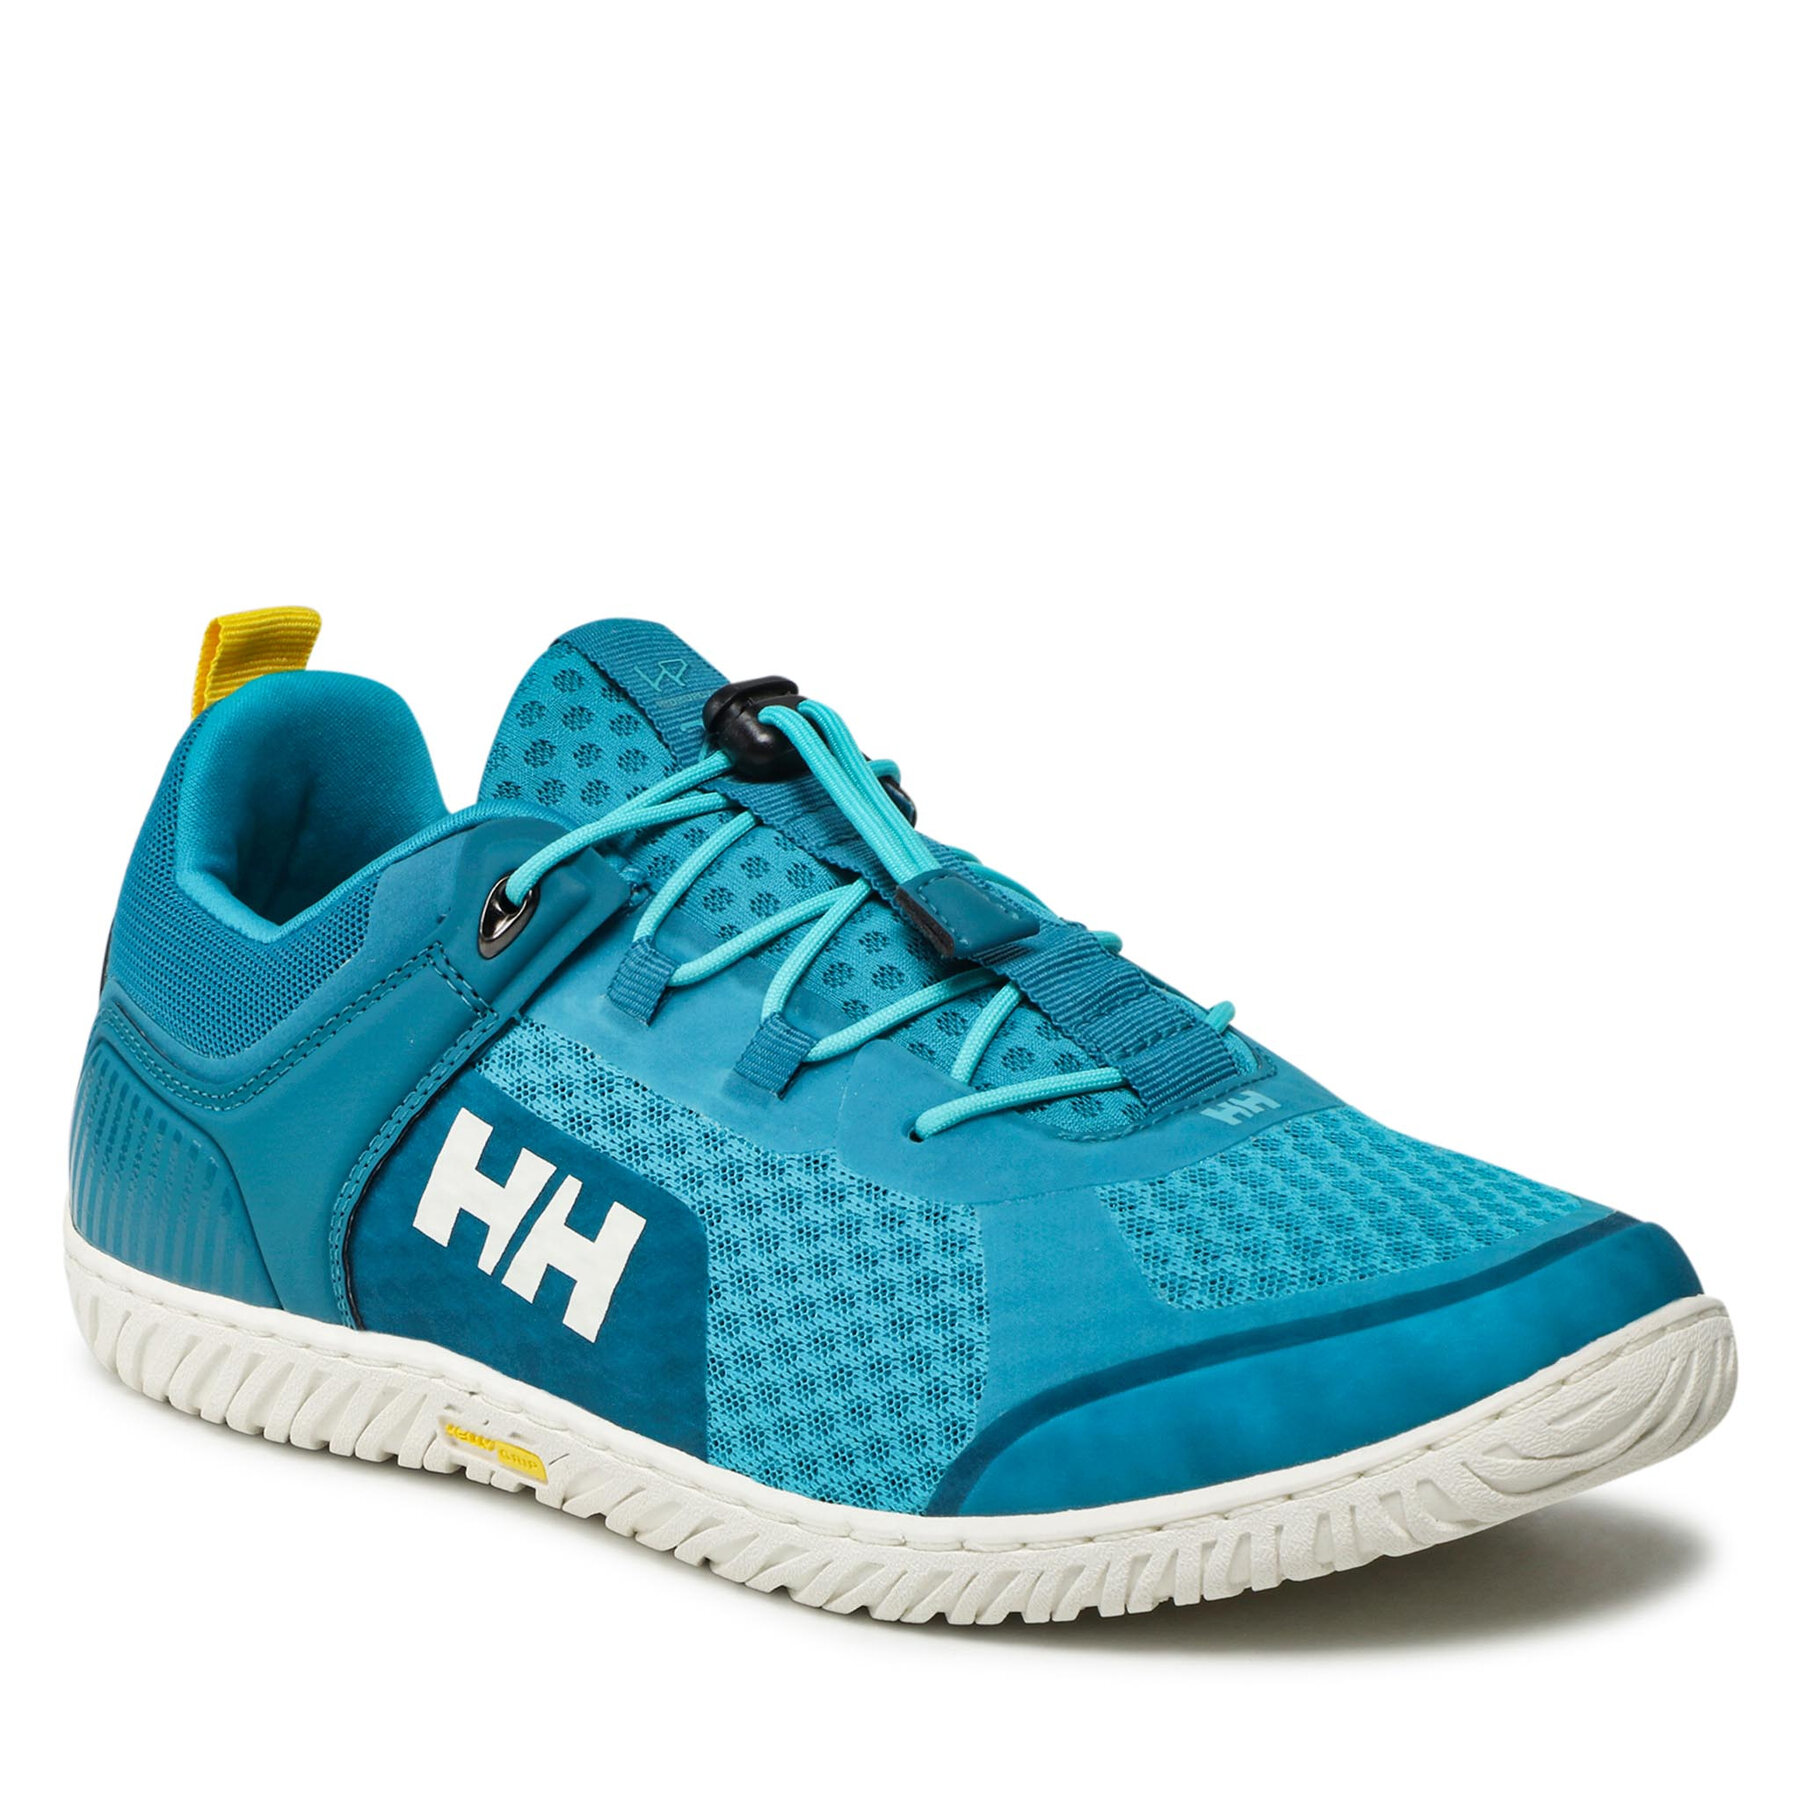 Pantofi Helly Hansen Hp Foil V2 11708_642 Teal/Caribbean Sea